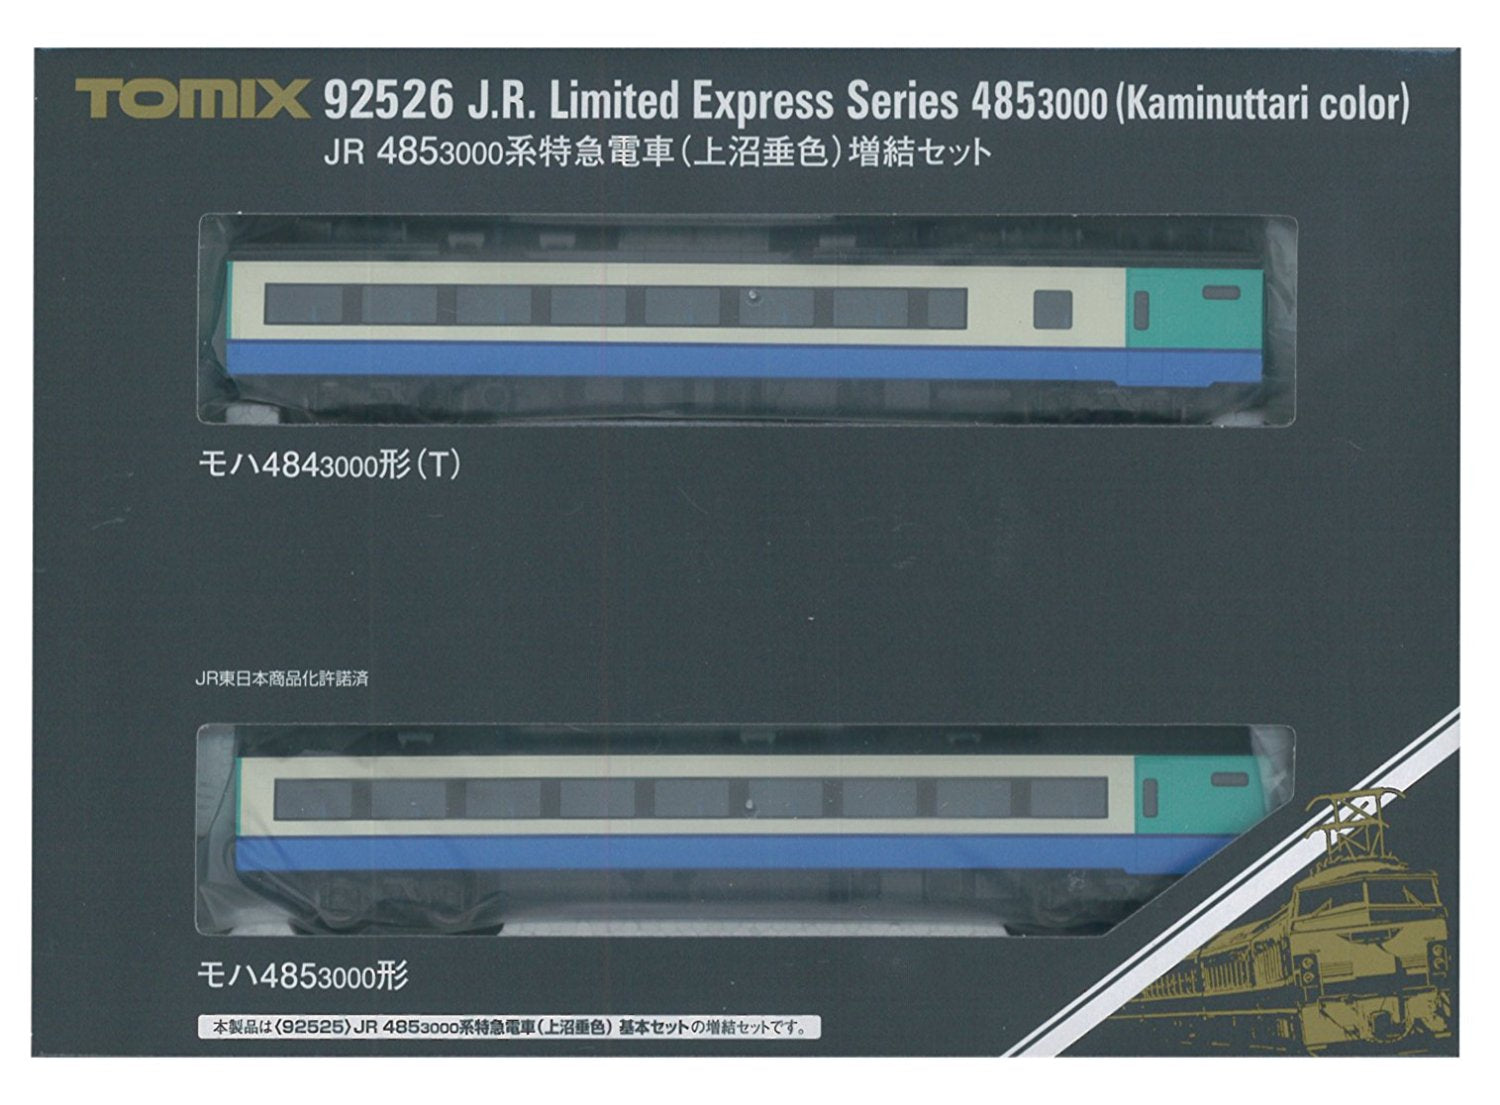 J.R. Limited Express Series 485-3000 (Kaminuttari Color) (2 car)